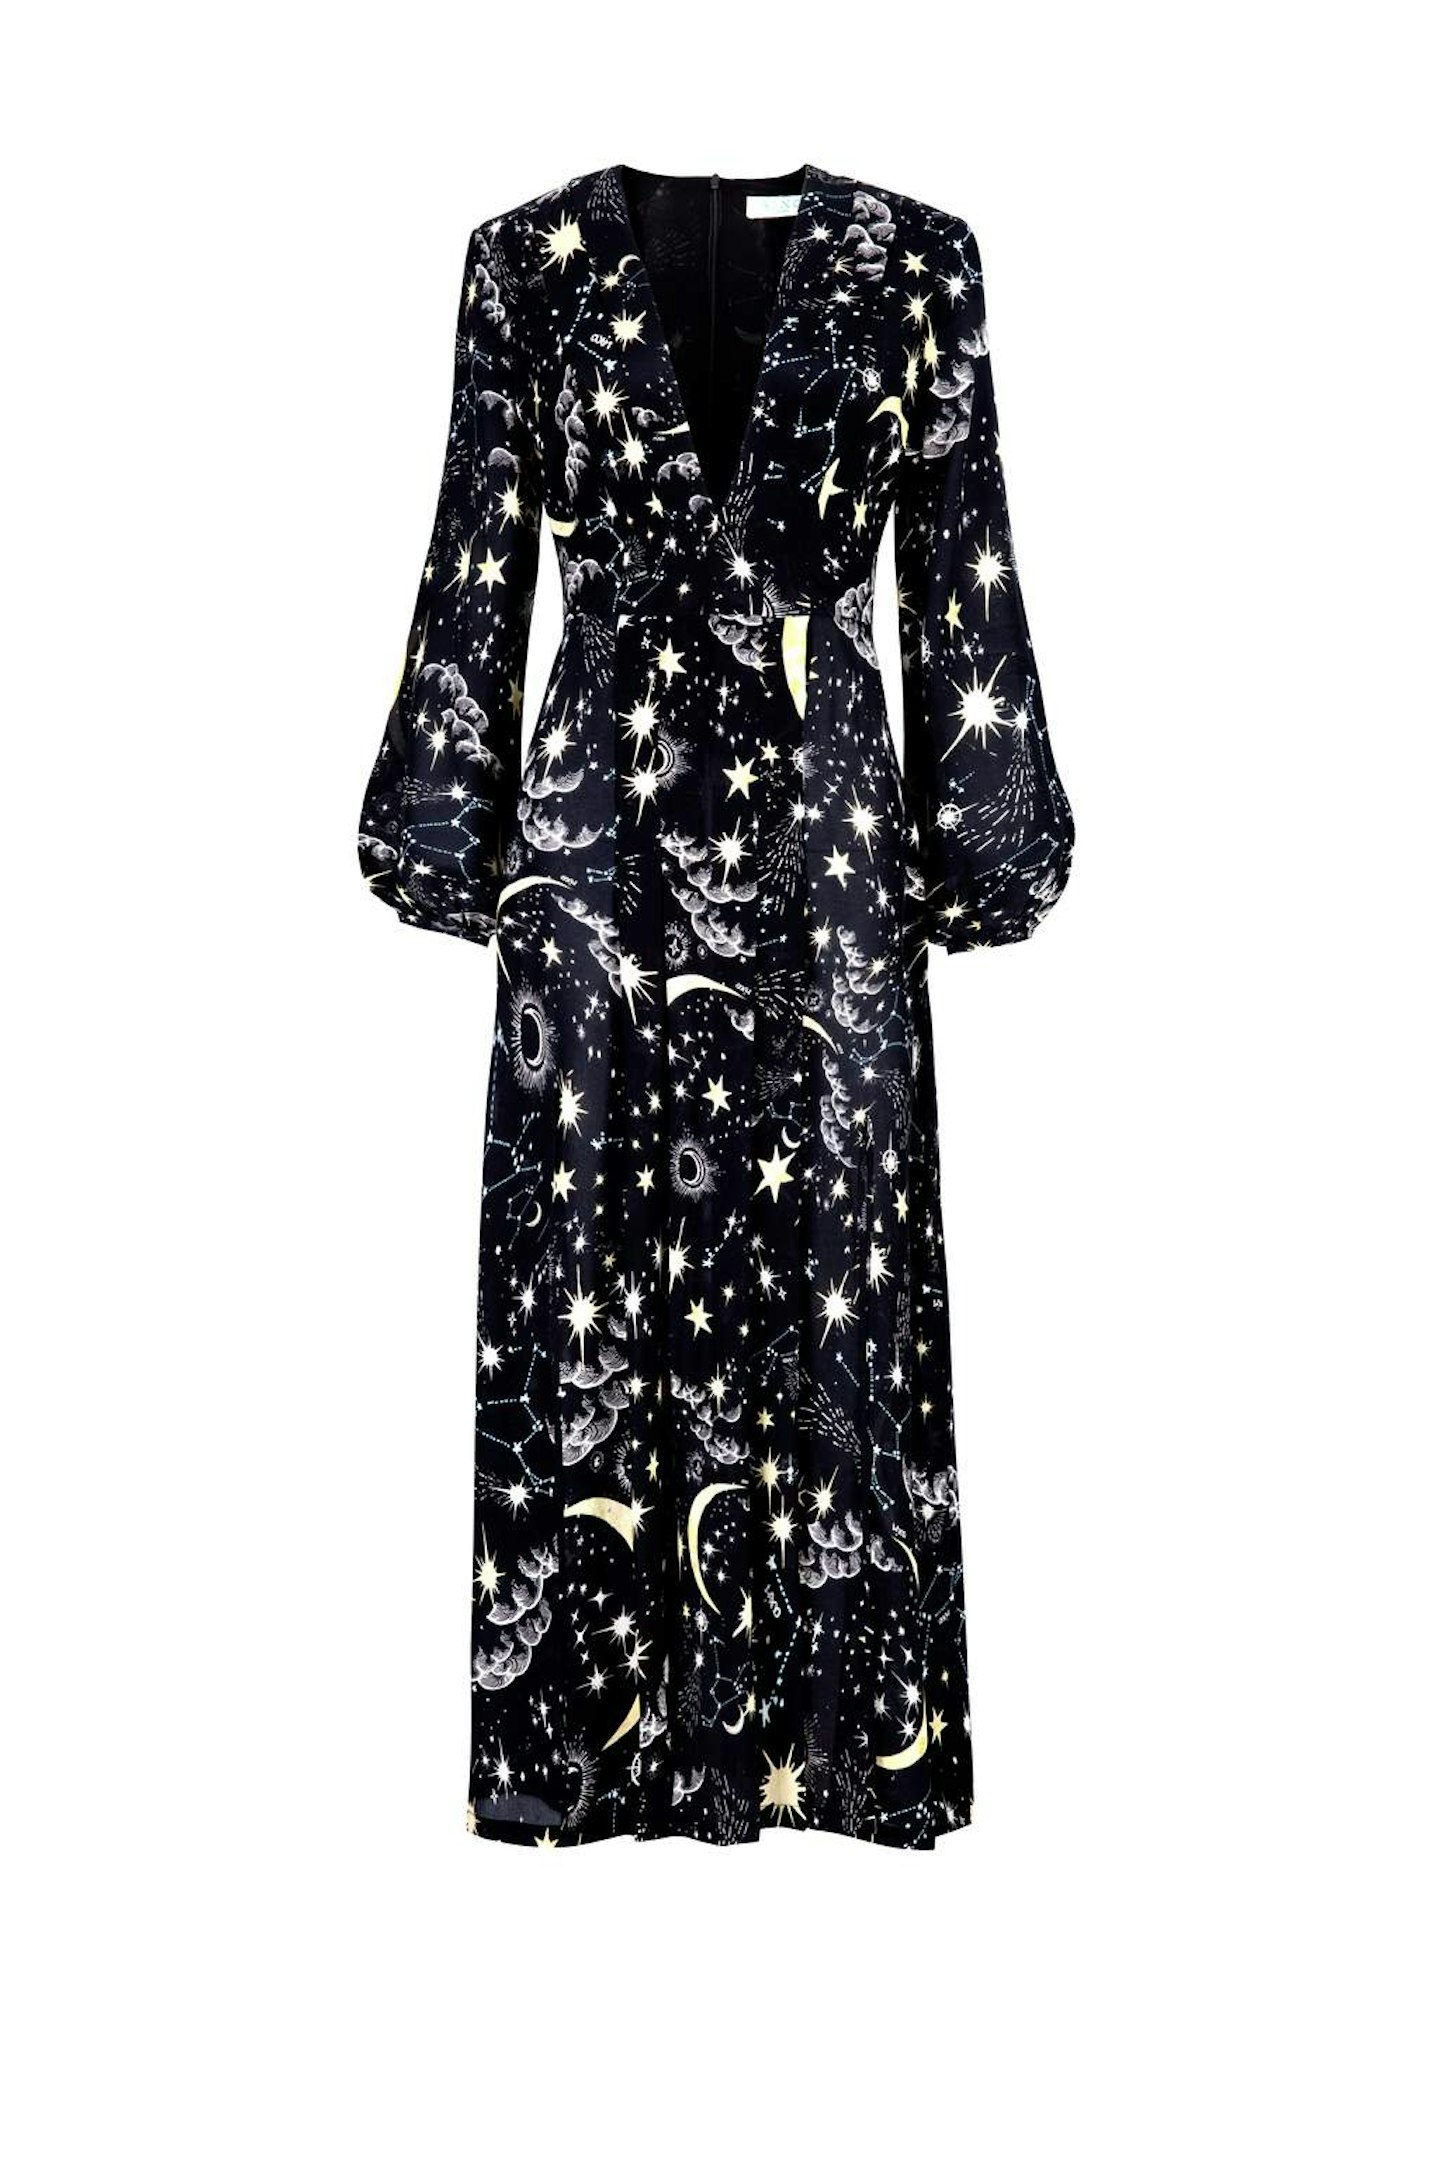 rixo-london-star-print-dress